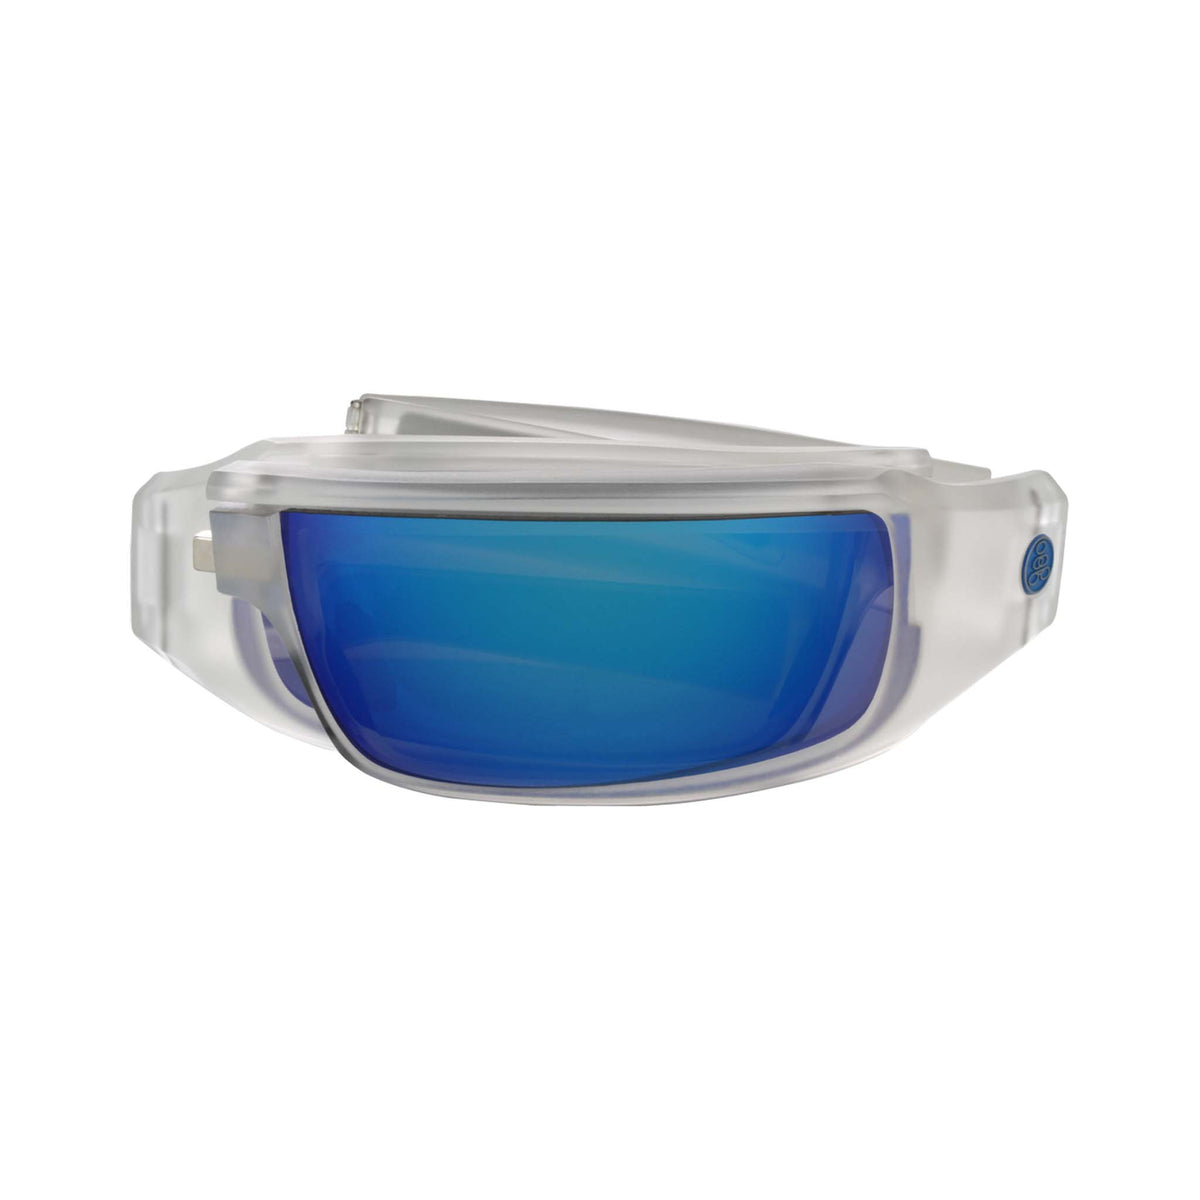 Popticals, Premium Compact Sunglasses, PopSign, 010020-XYUN, Polarized Sunglasses, Matte Crystal Frame, Gray Lenses w/Blue Mirror Finish, Compact View